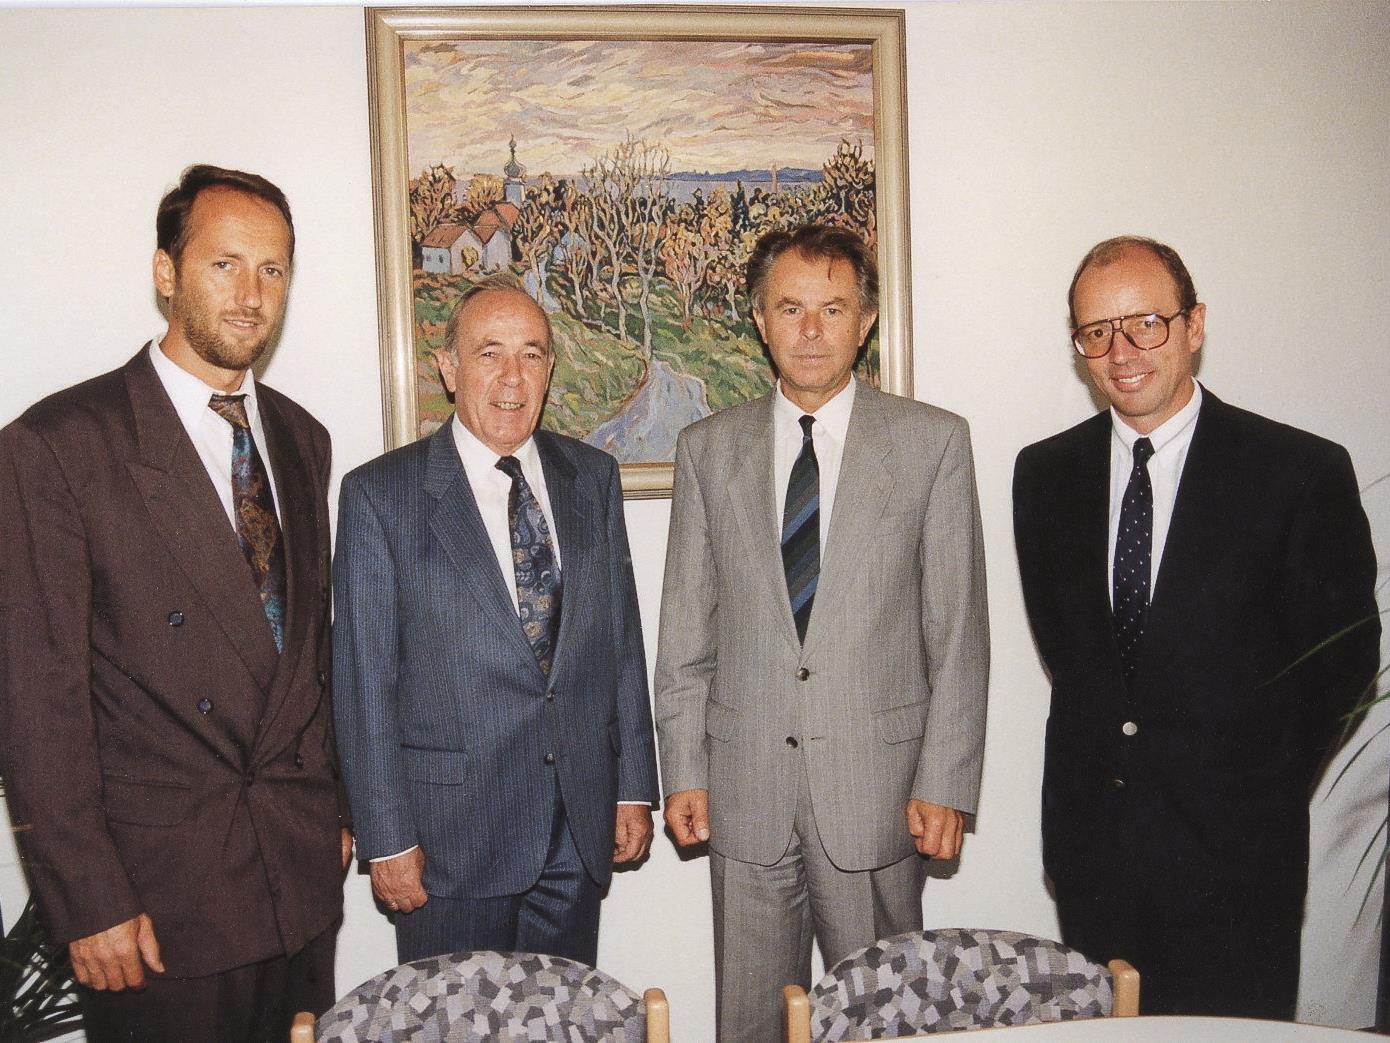 Angelobung im Jahre 1991: Bürgermeister Xaver Sinz, Altbürgermeister Wilfried Schallert, Bezirkshauptmann Hofrat Dr. Elmar Sperger und Vizebürgermeister LAbg. Gottfried Schröckenfuchs.